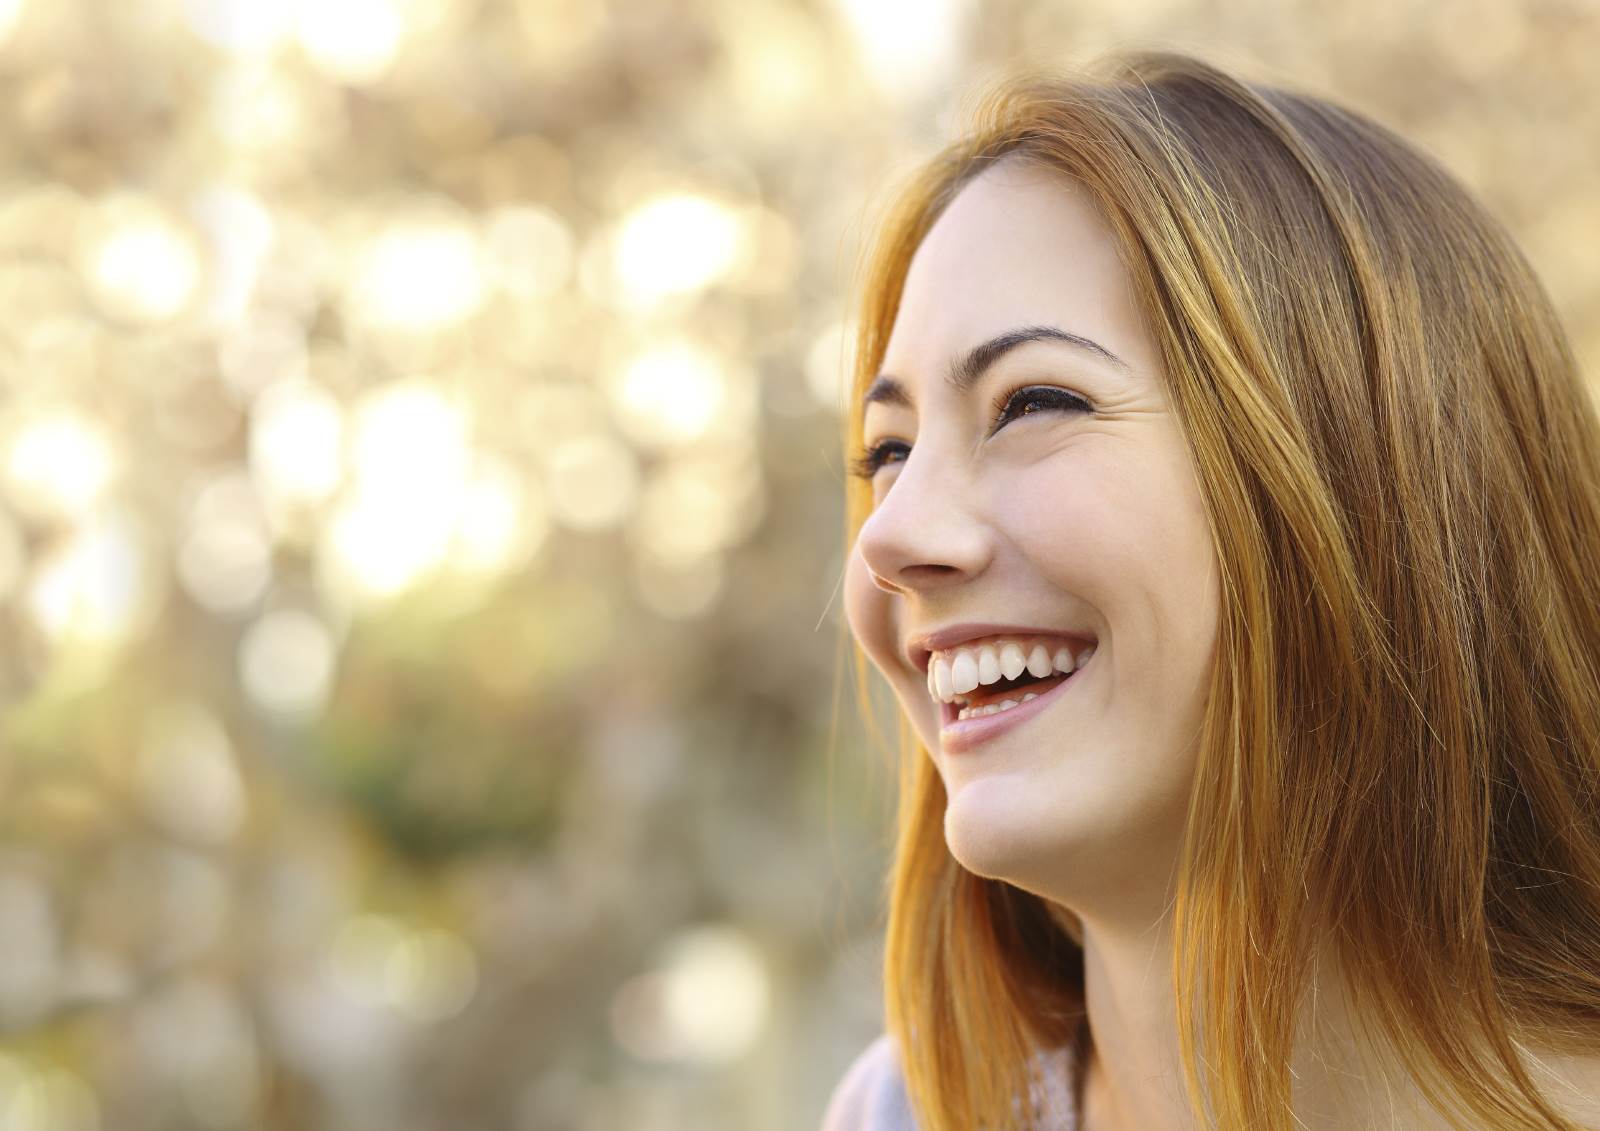 10 Different Types Of Smiles | Stillunfold